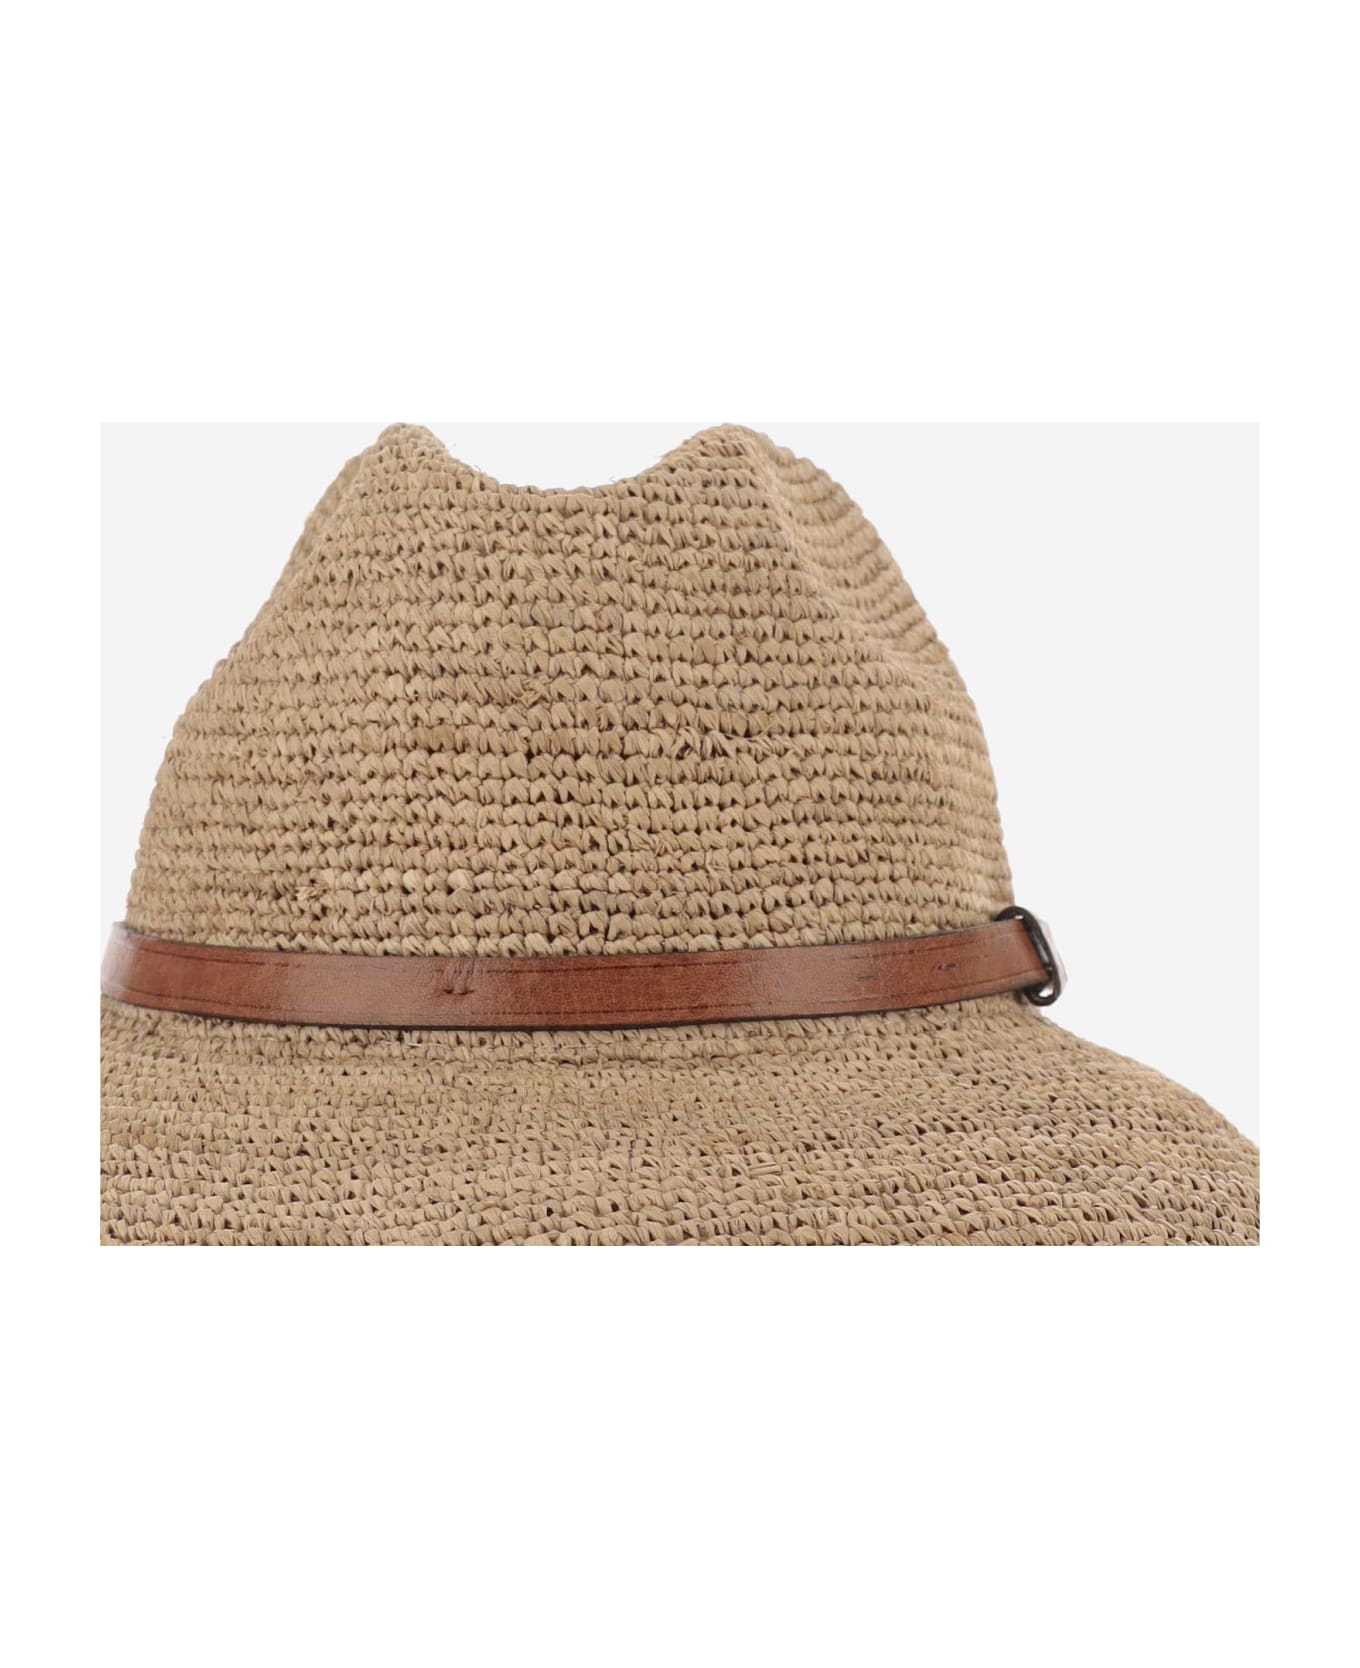 Ibeliv Raffia Hat With Leather Strap - TEA